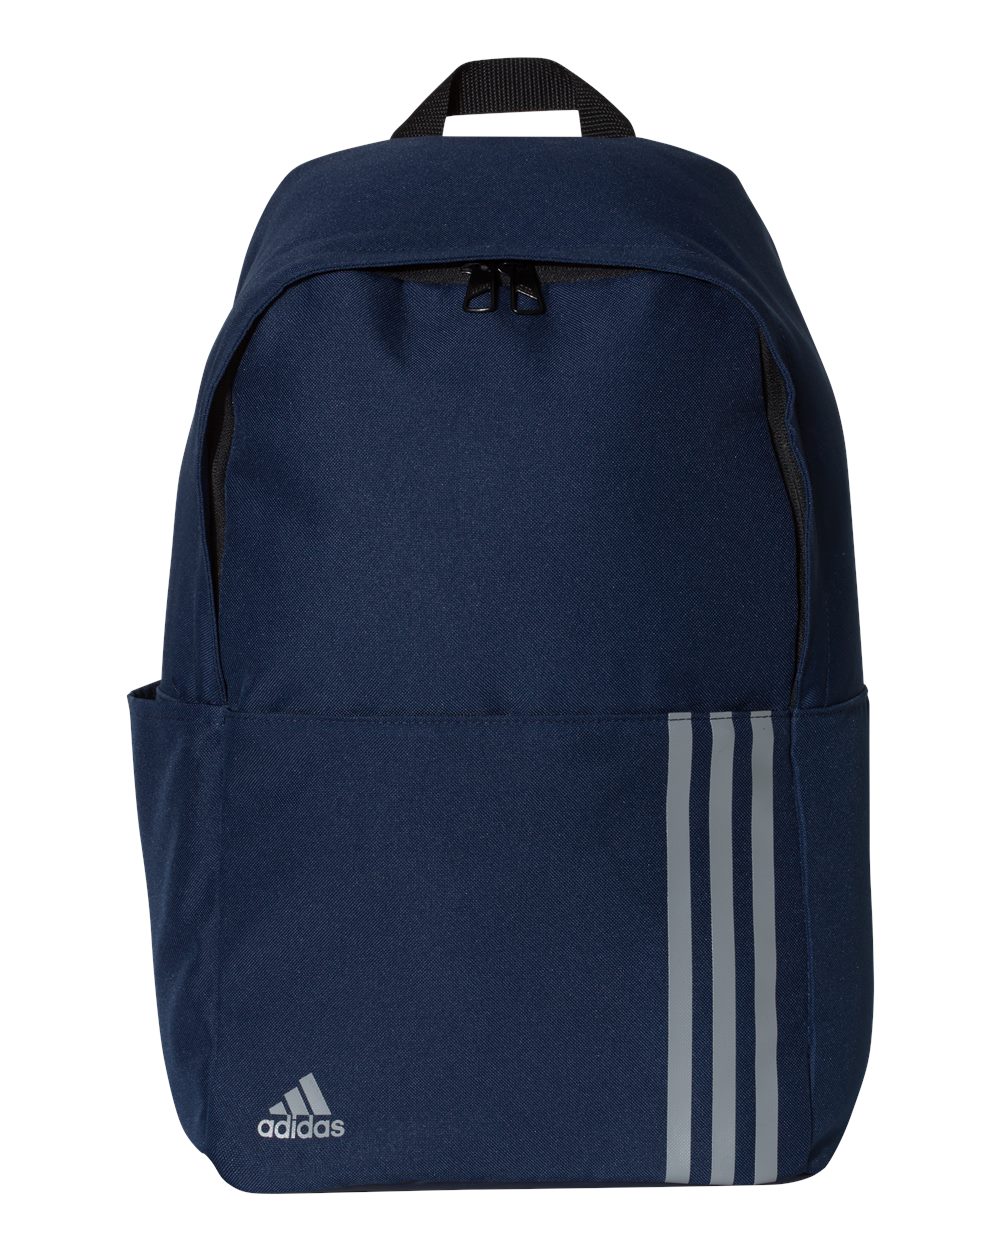 Adidas Laptop School bookbag 18Lt 3-Stripes Small Backpack 11x18x5.5 ...